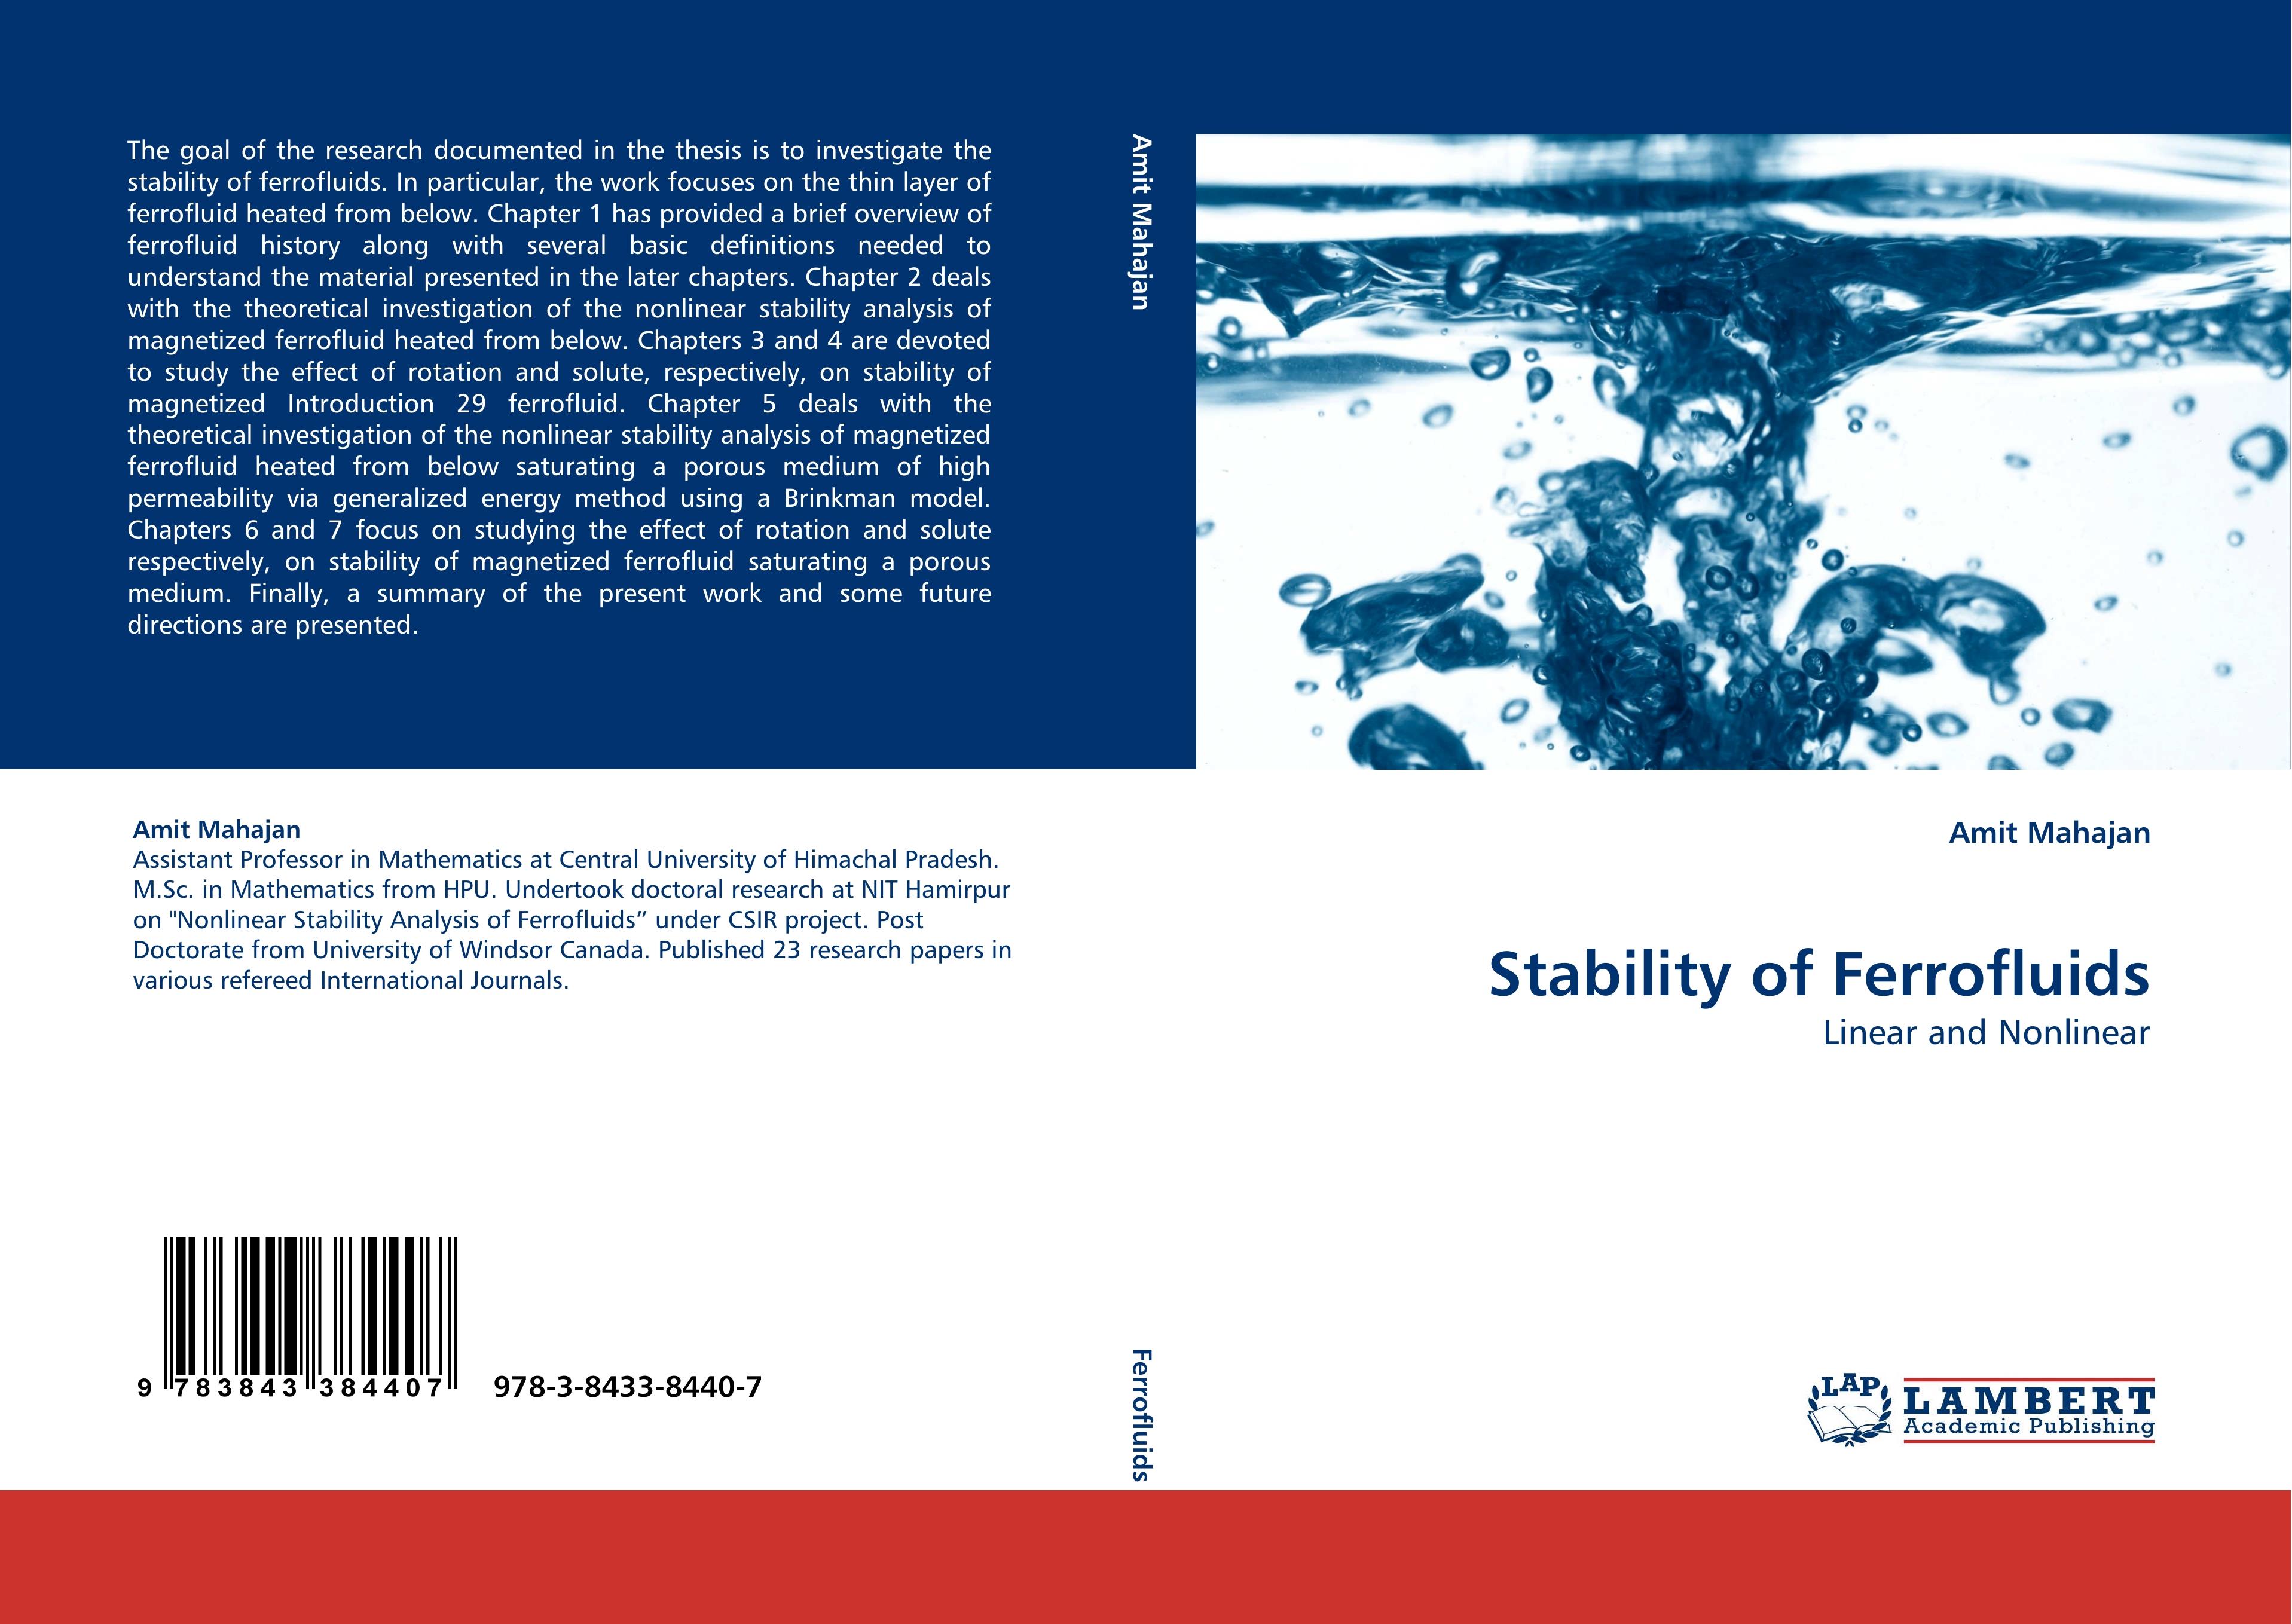 Stability of Ferrofluids - Amit Mahajan